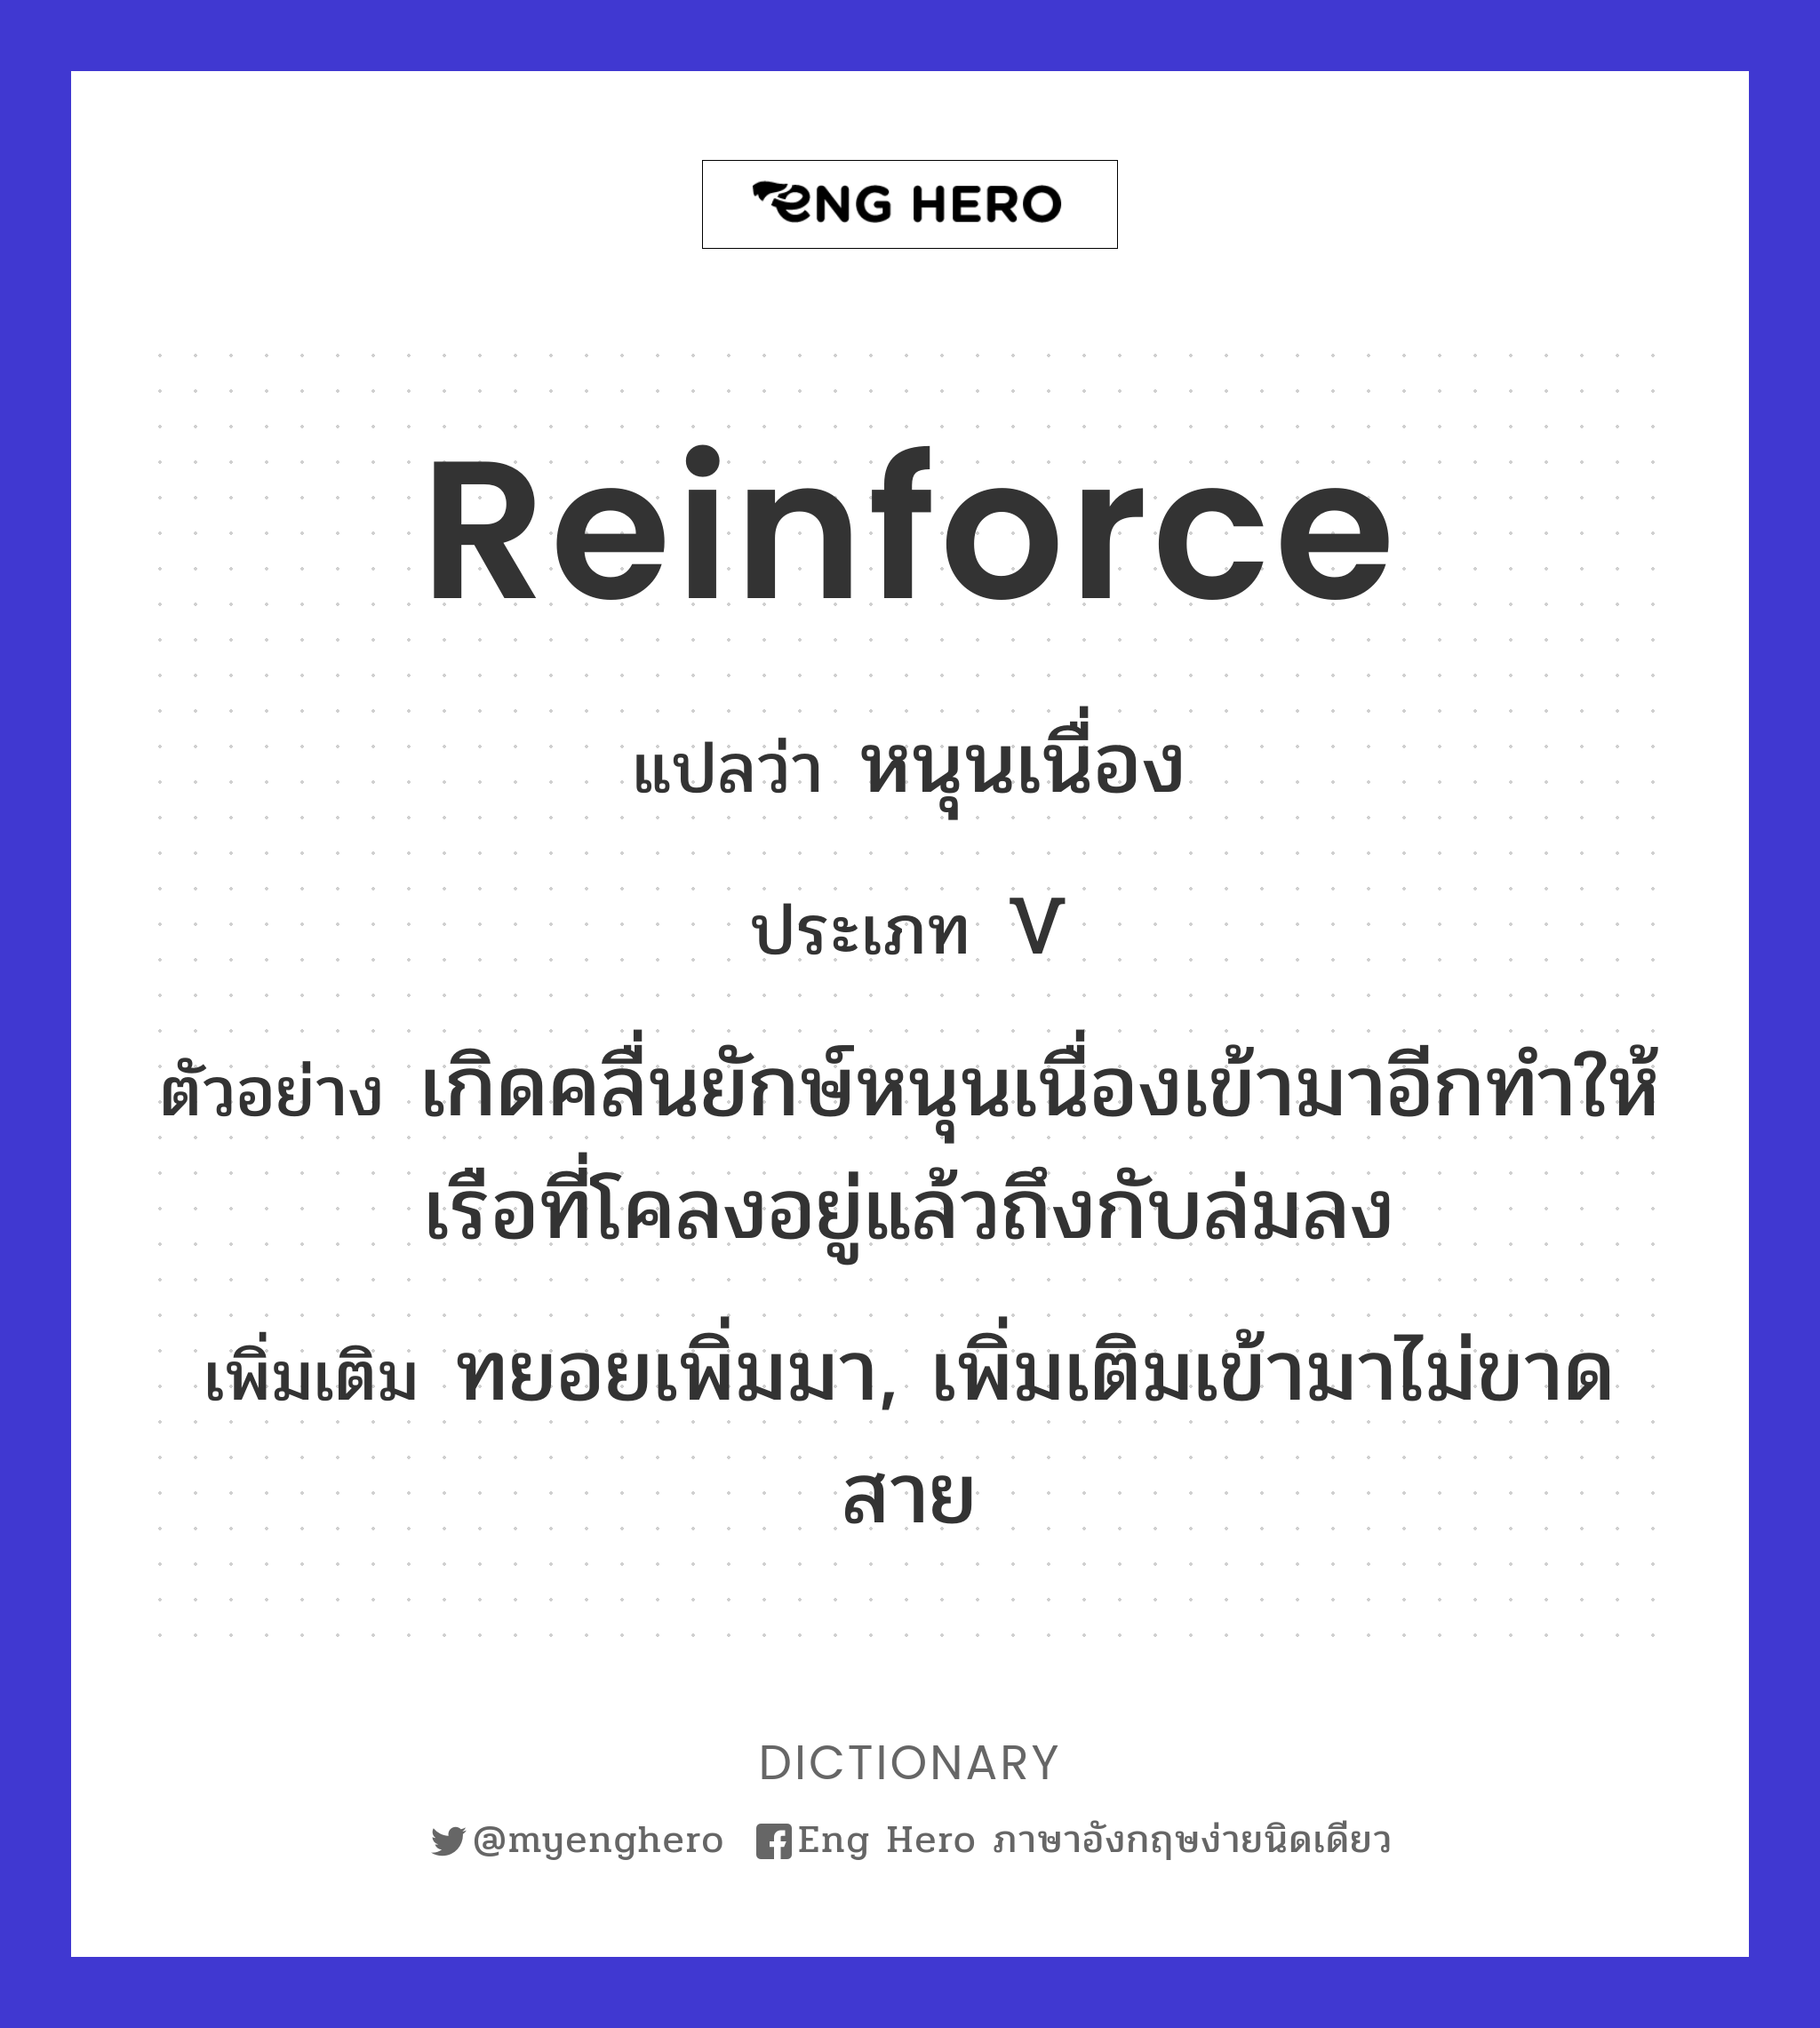 reinforce